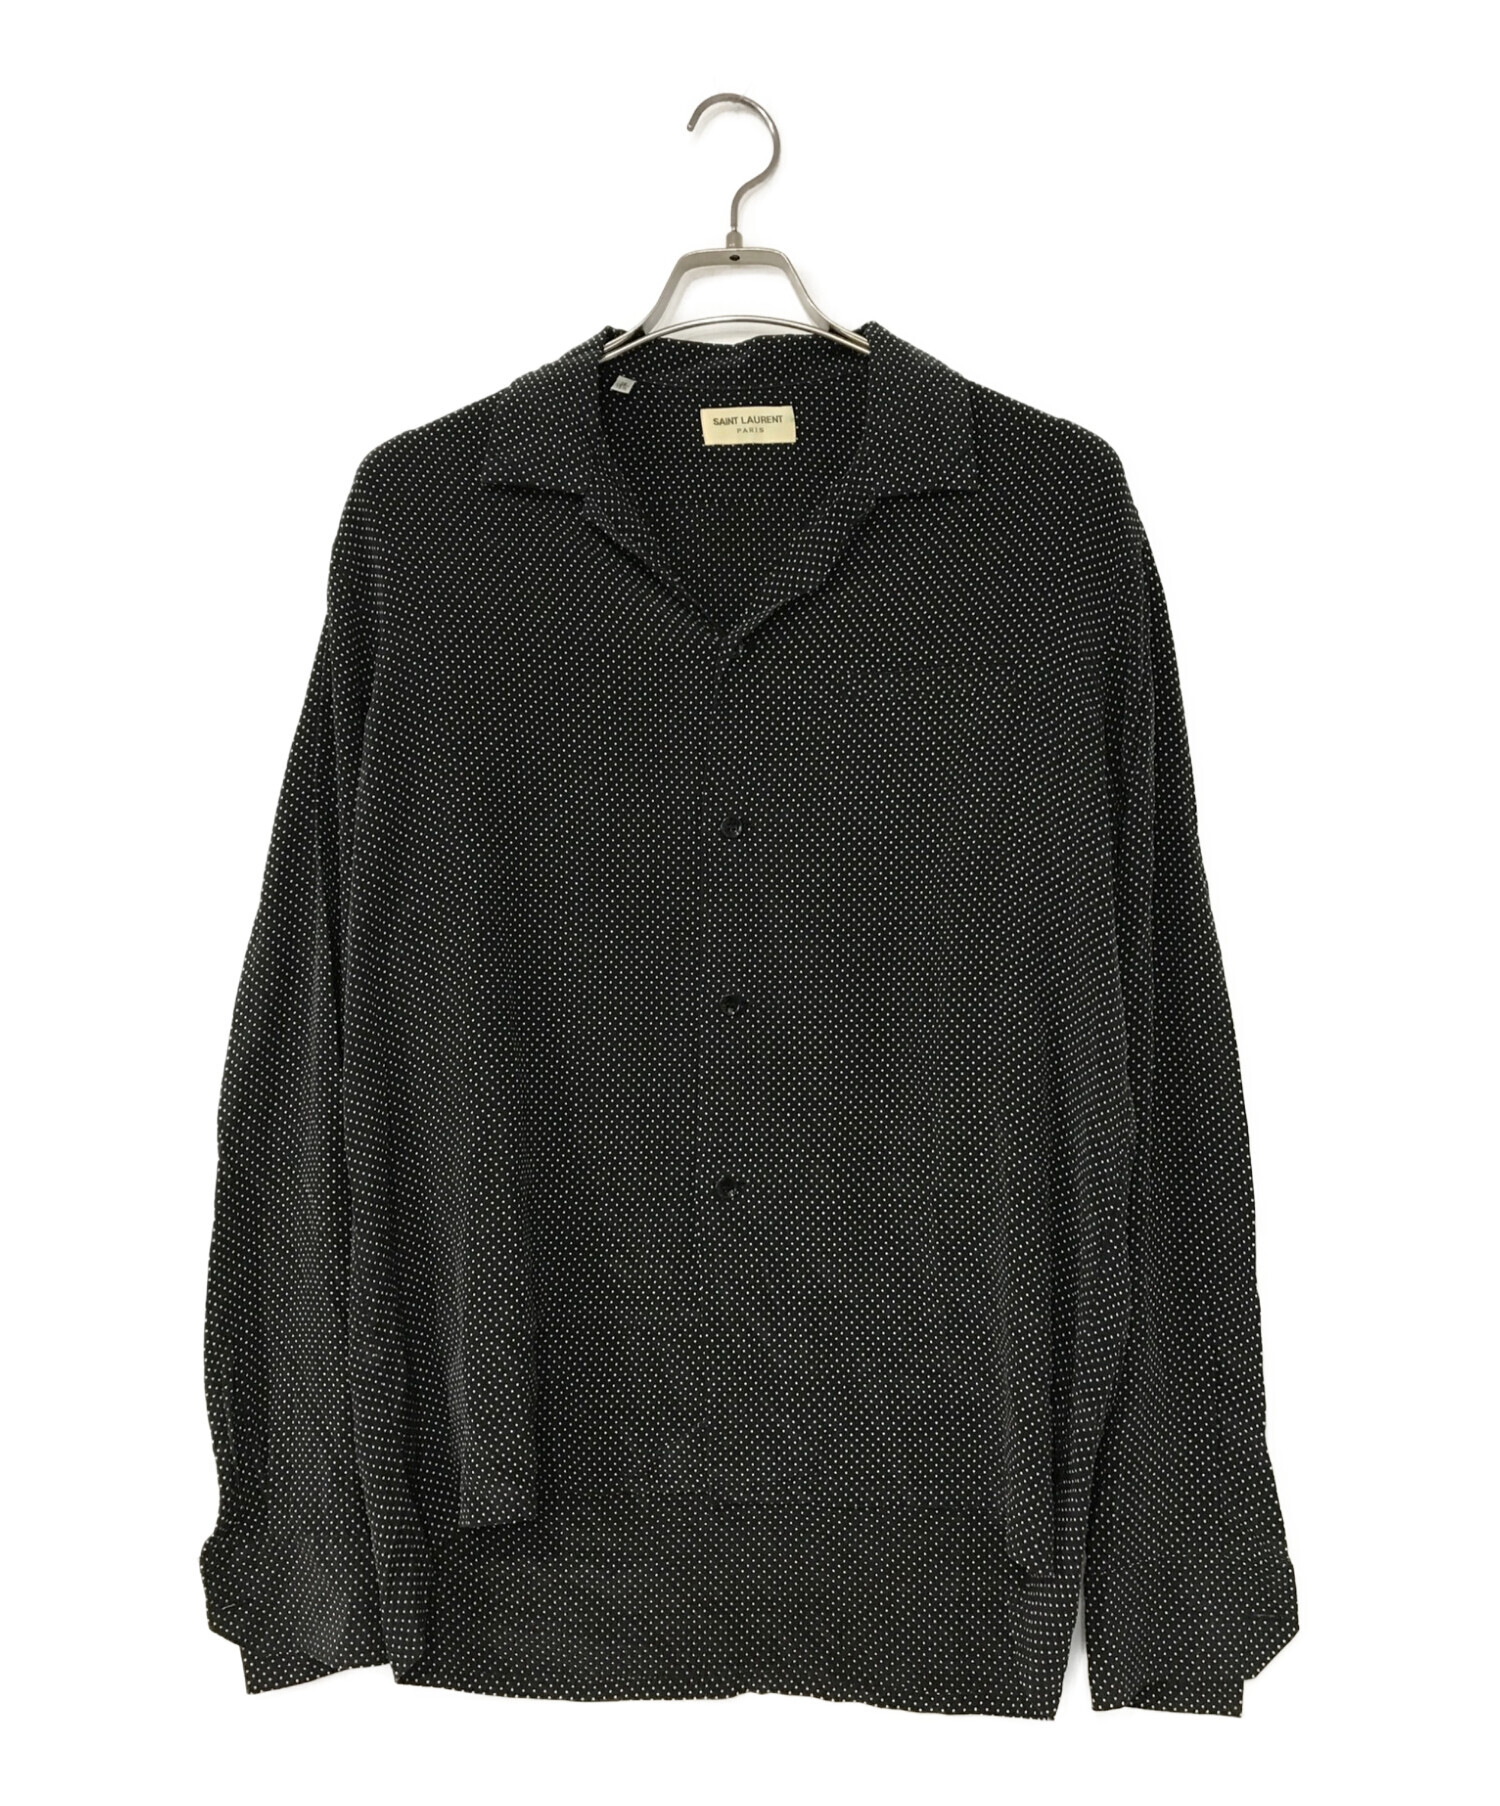 Saint Laurent Paris (サンローランパリ) ドットシャツ ブラック サイズ:39